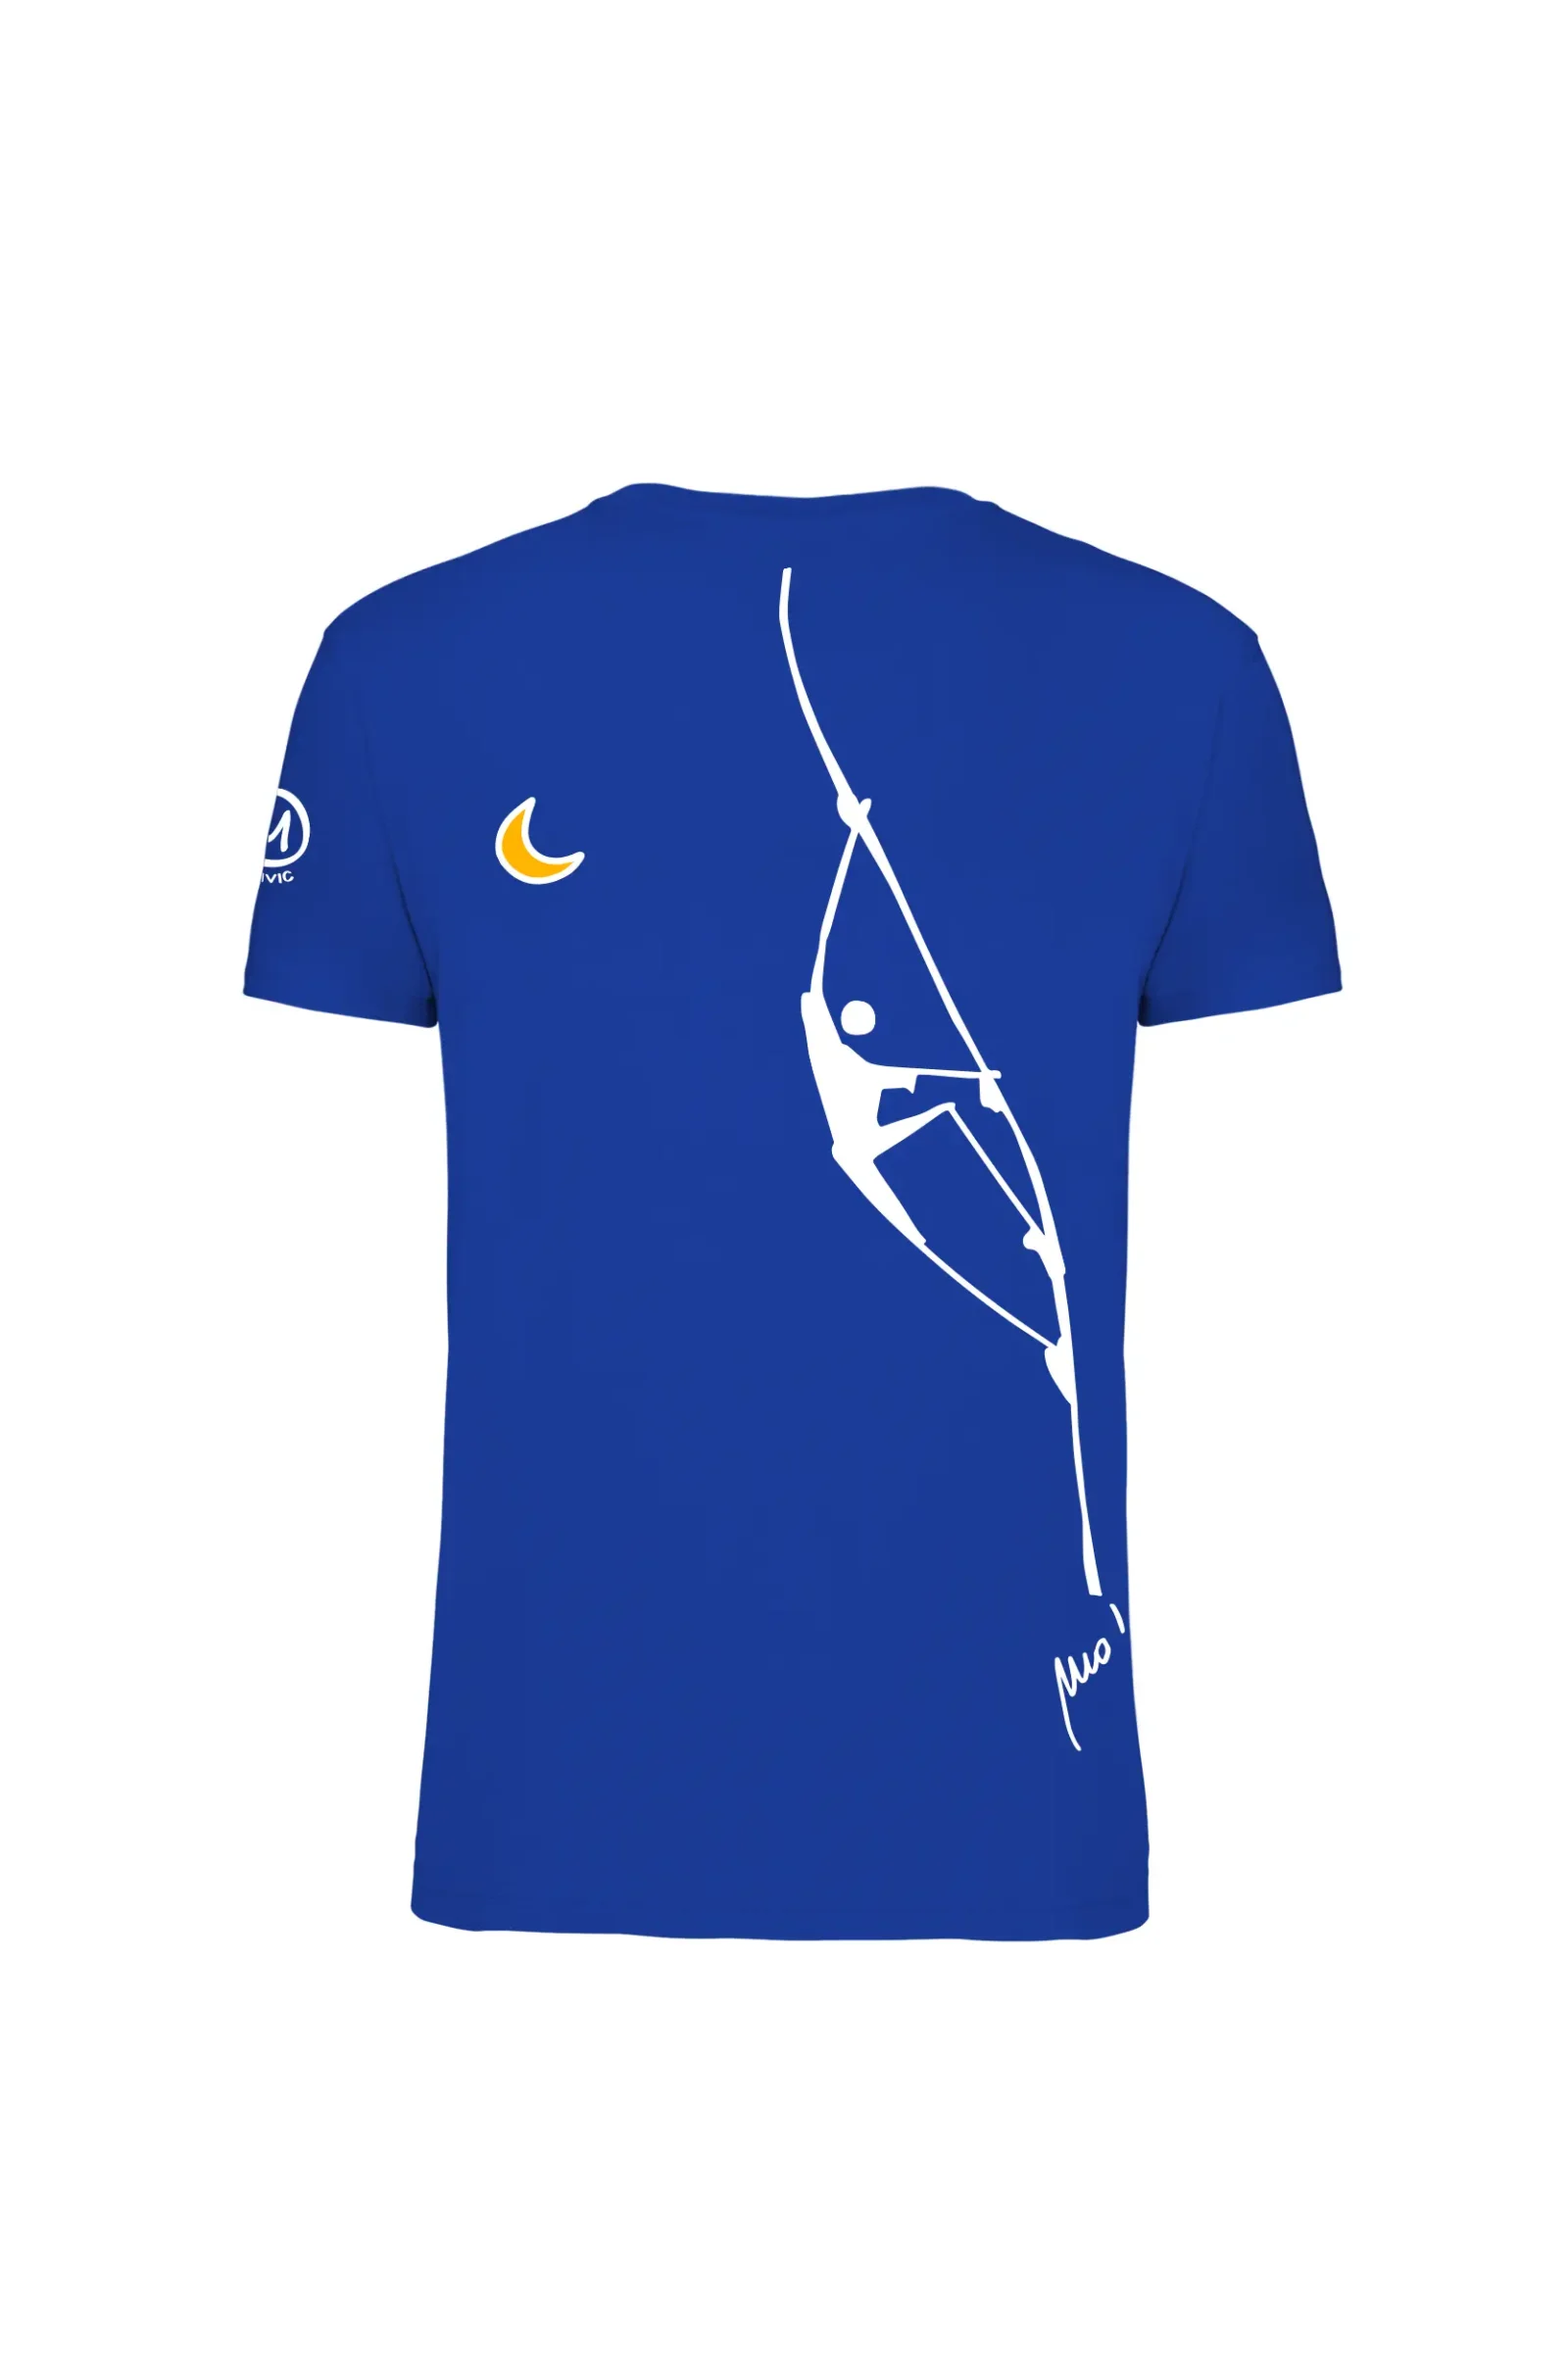 T-shirt uomo blu royal con grafica arrampicata "Teba" - Monvic HASH